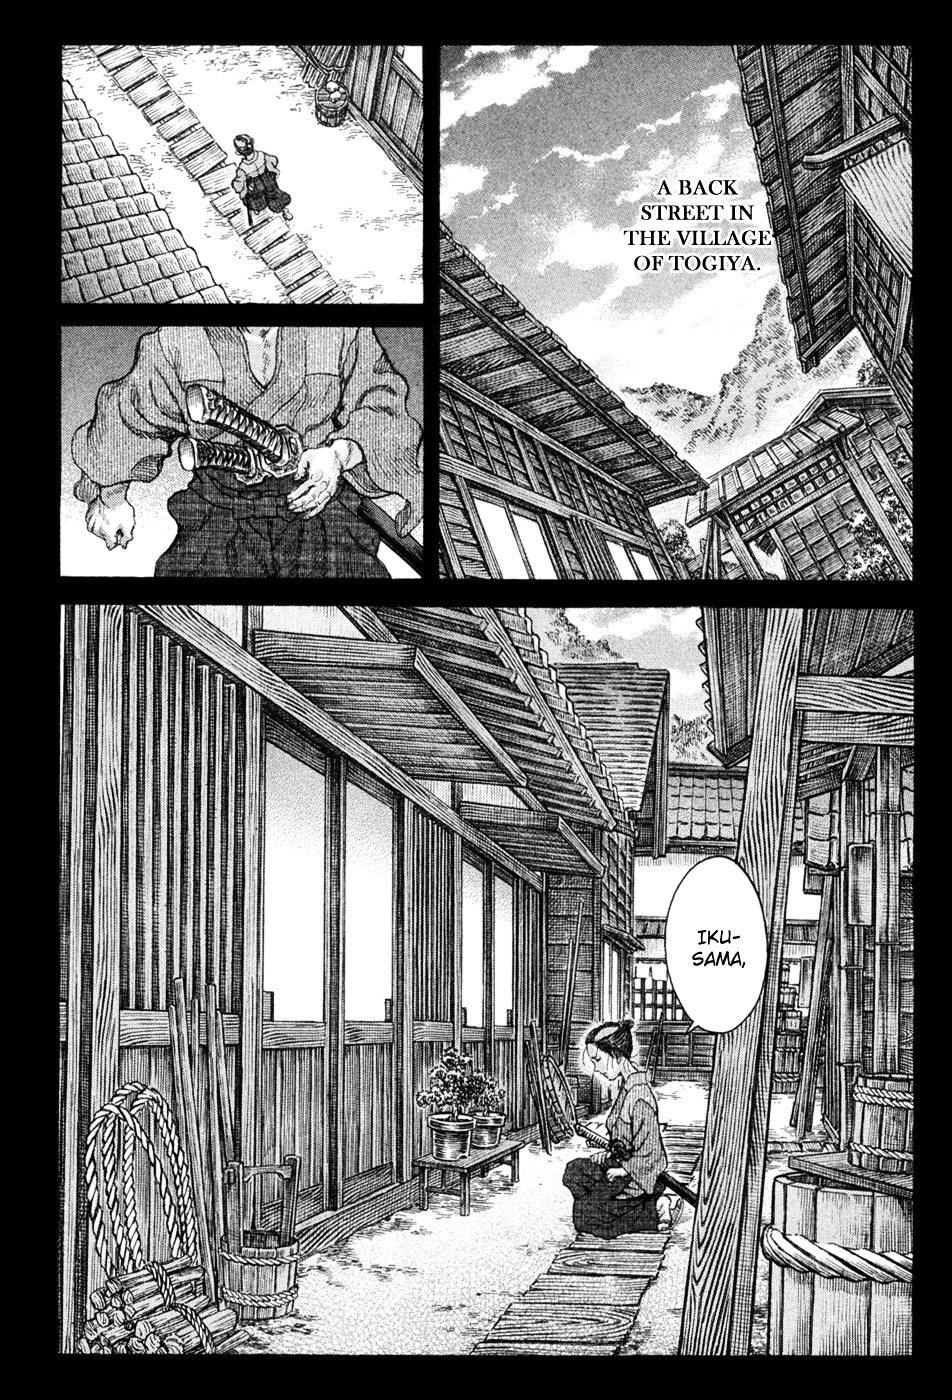 Shigurui - Page 2